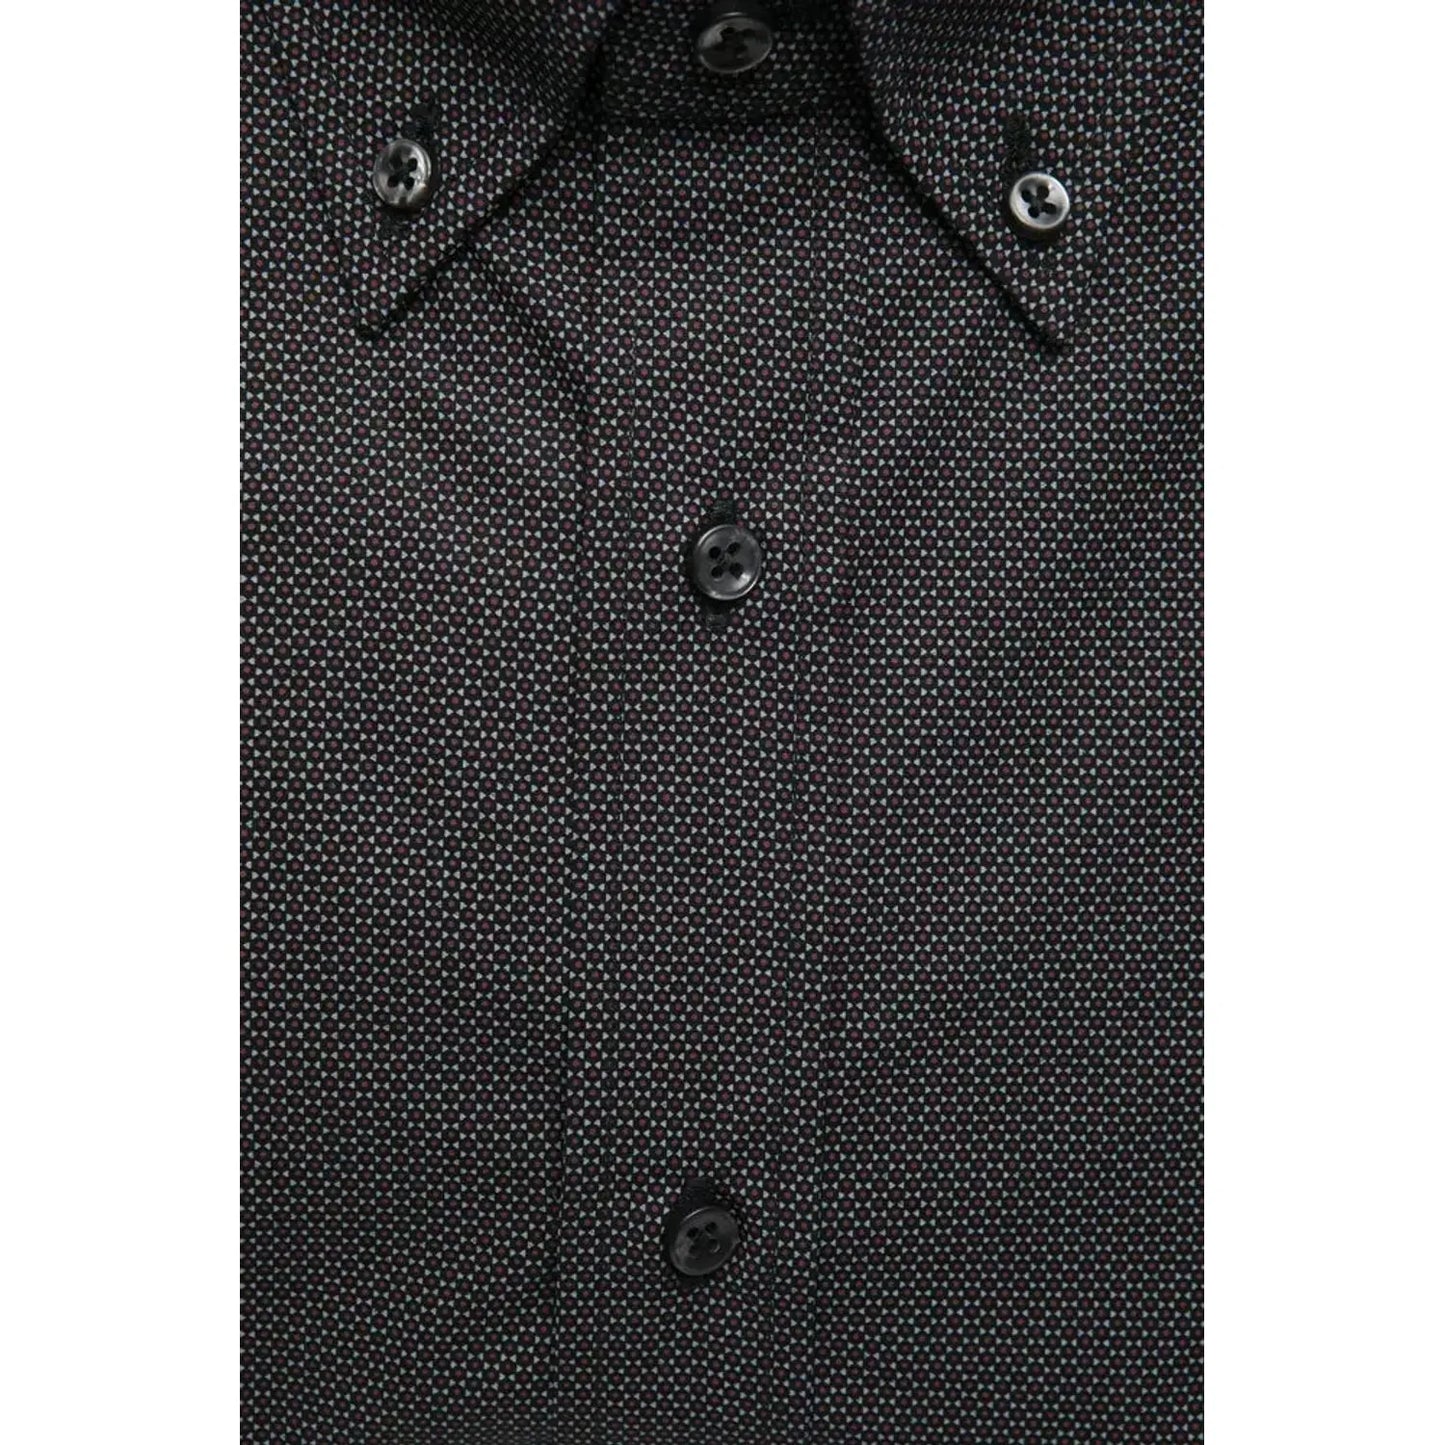 Robert Friedman Elegant Cotton Button-Down Shirt in Black black-cotton-shirt-19